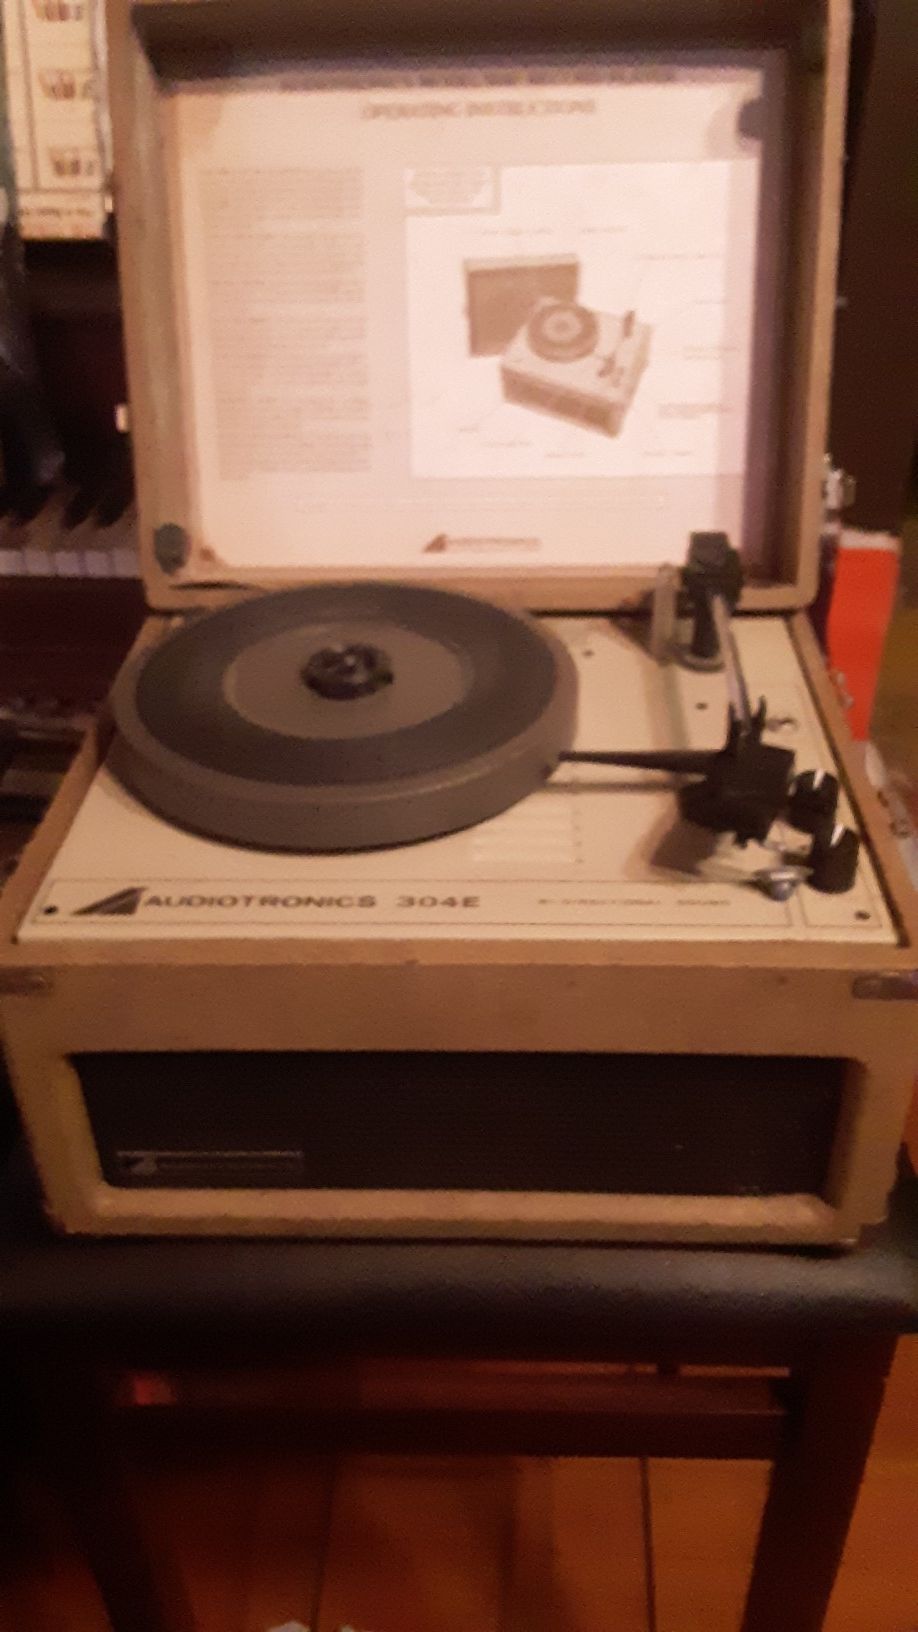 VINTAGE Audiotronics phonograph